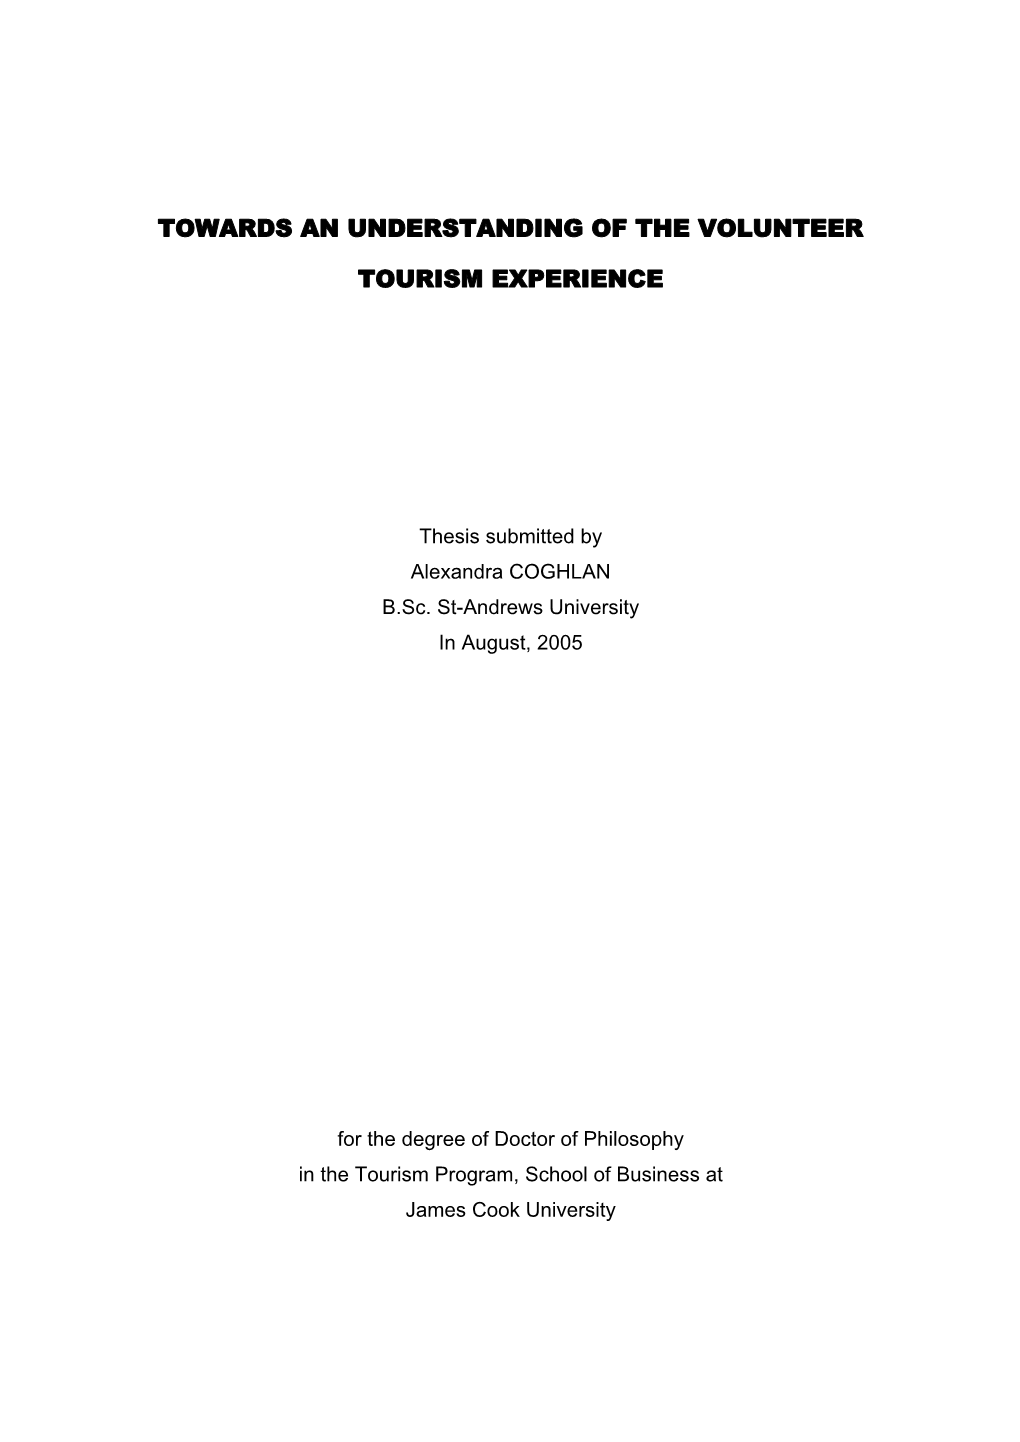 Towards an Understanding of the Volunteer Tourism Experience